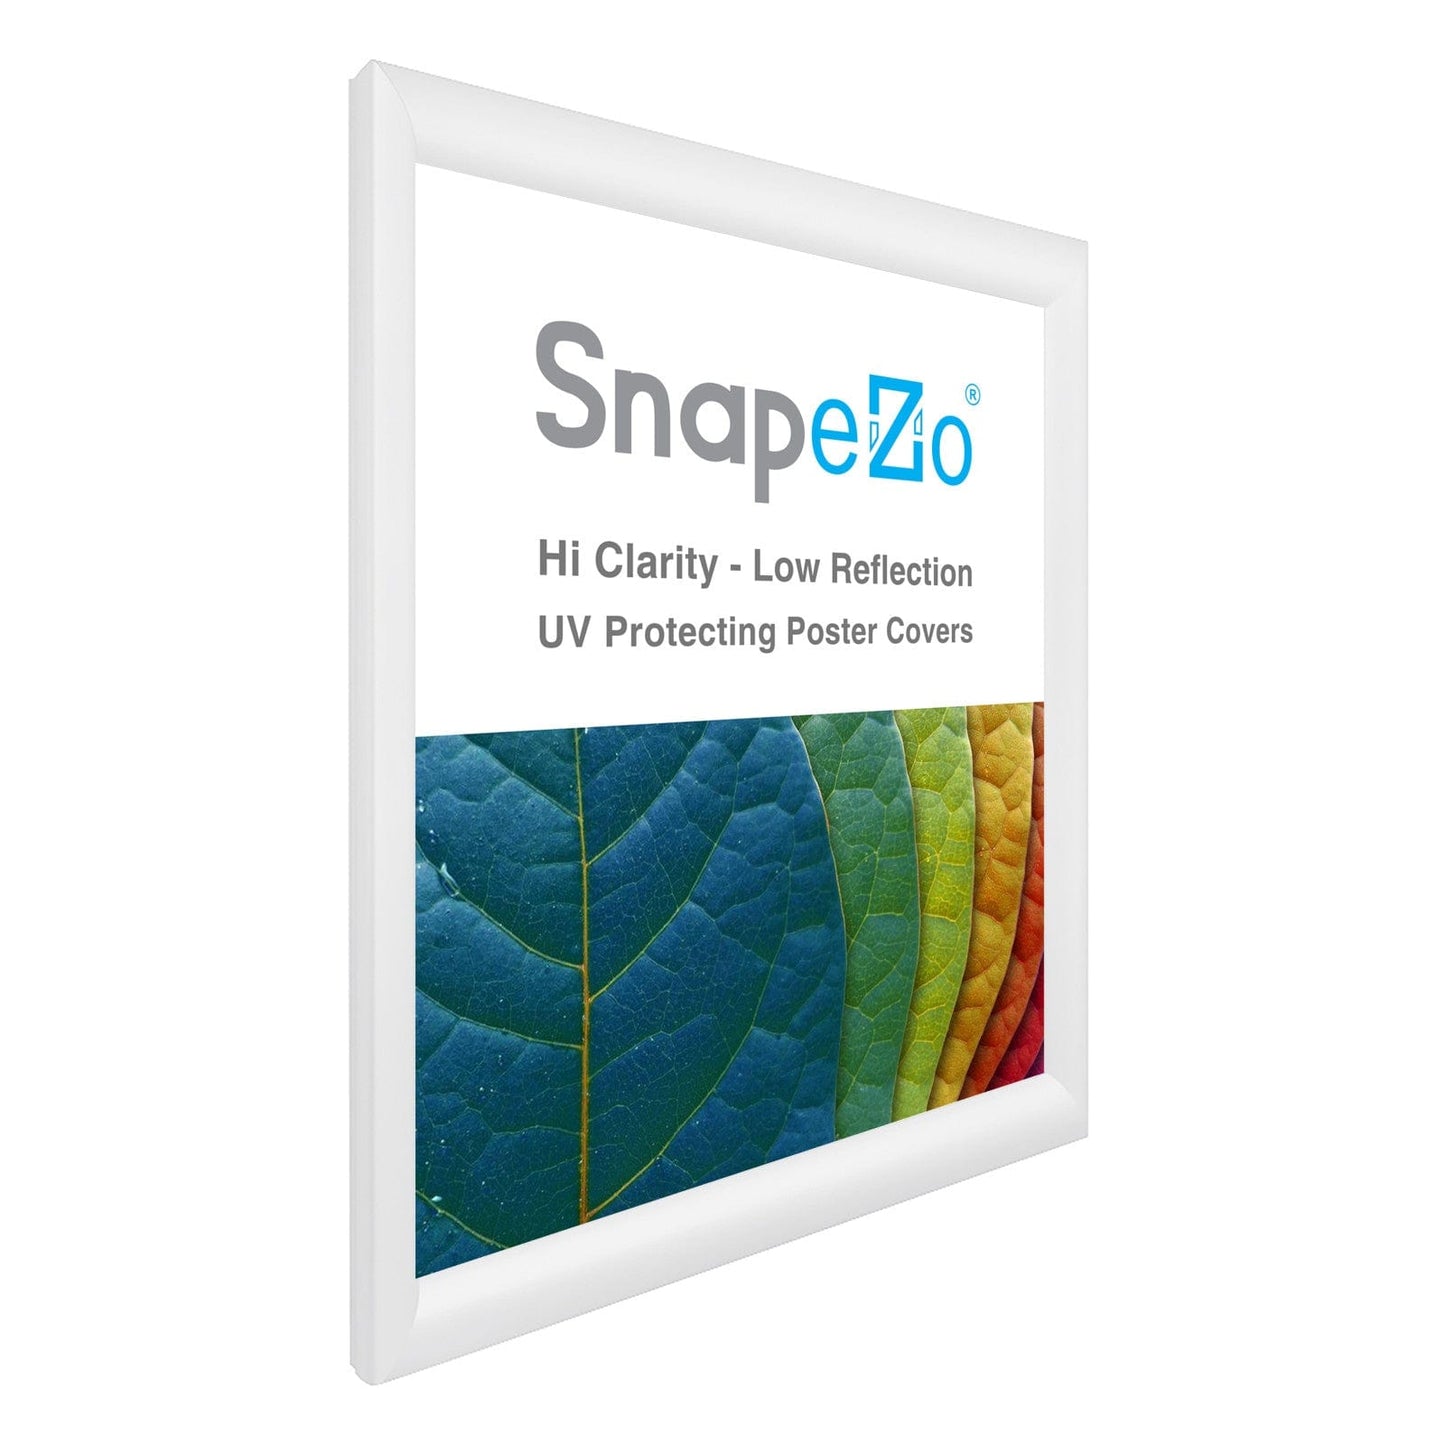 17x21 White SnapeZo® Snap Frame - 1.2" Profile - Snap Frames Direct